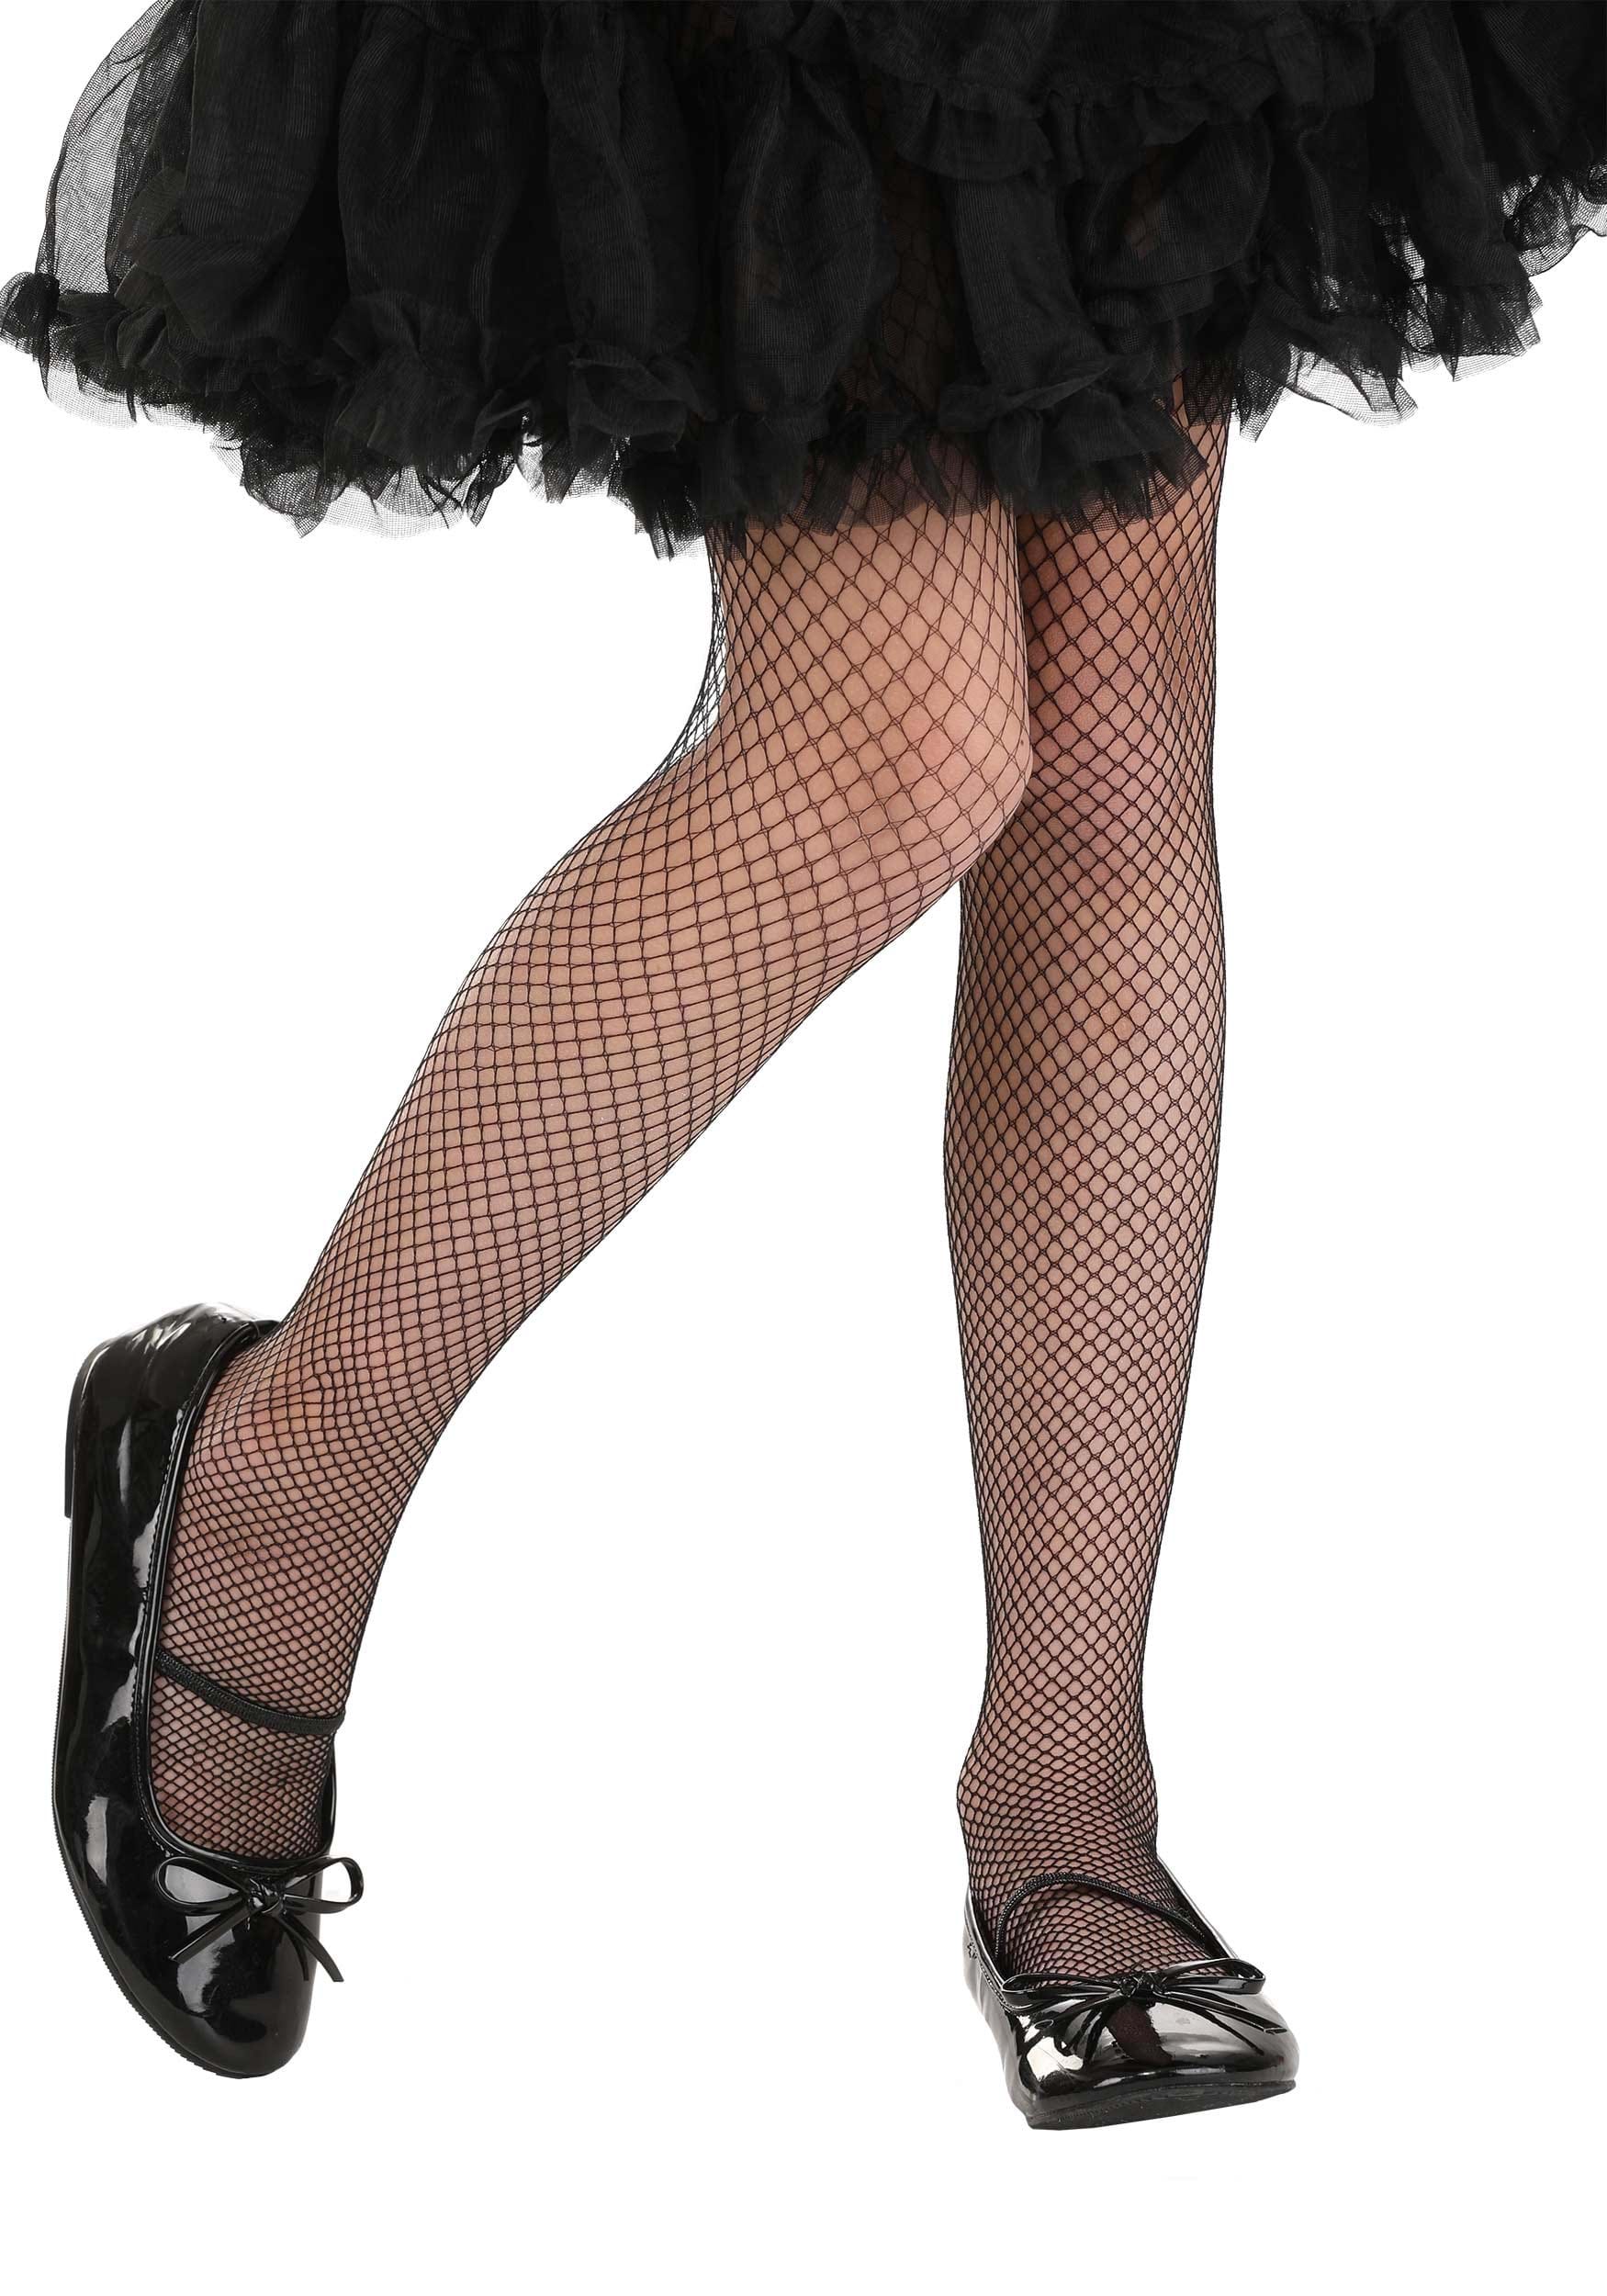 Girl's Black Fishnet Stockings | Costume Tights | Kids | Girls | Black | One-Size | FUN Costumes